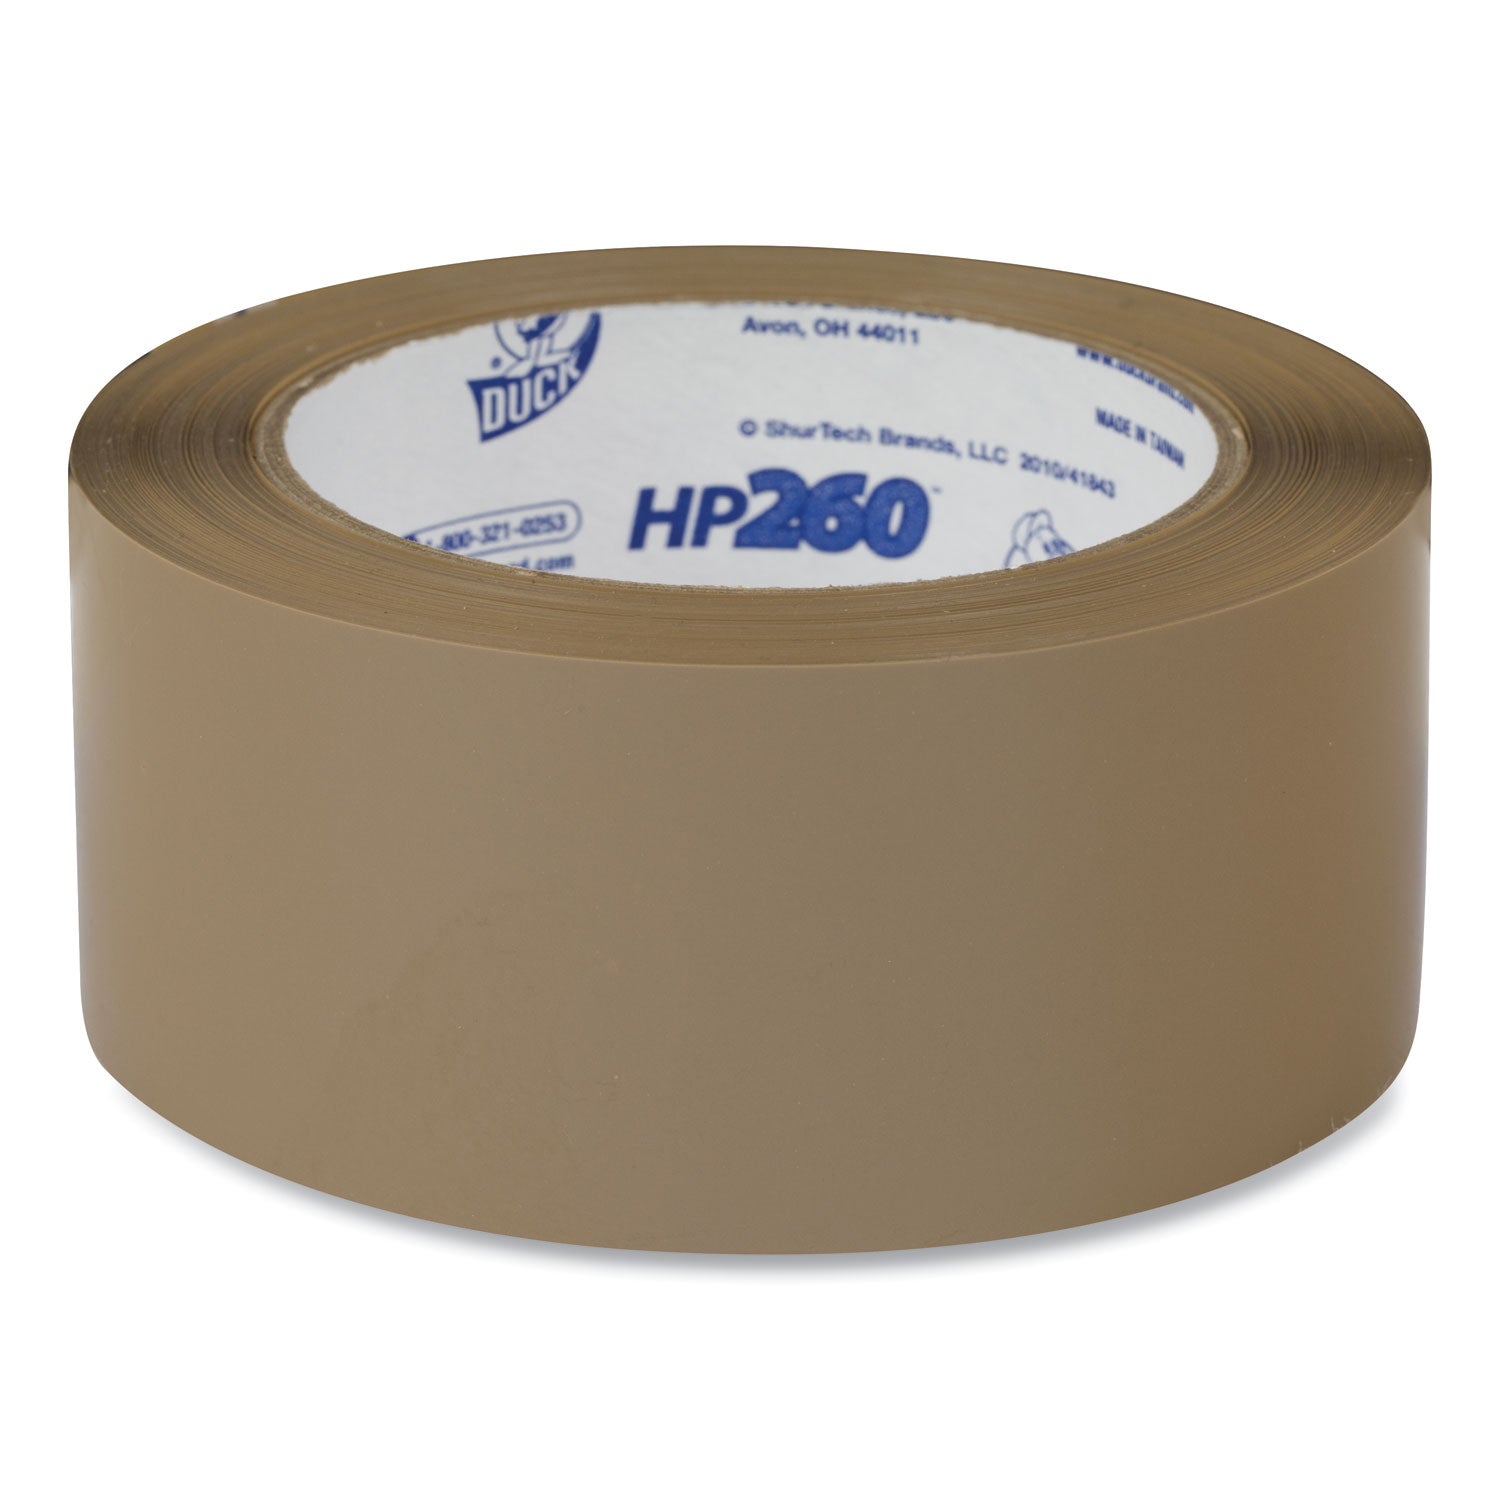 HP260 Packaging Tape, 3" Core, 1.88" x 60 yds, Tan - 